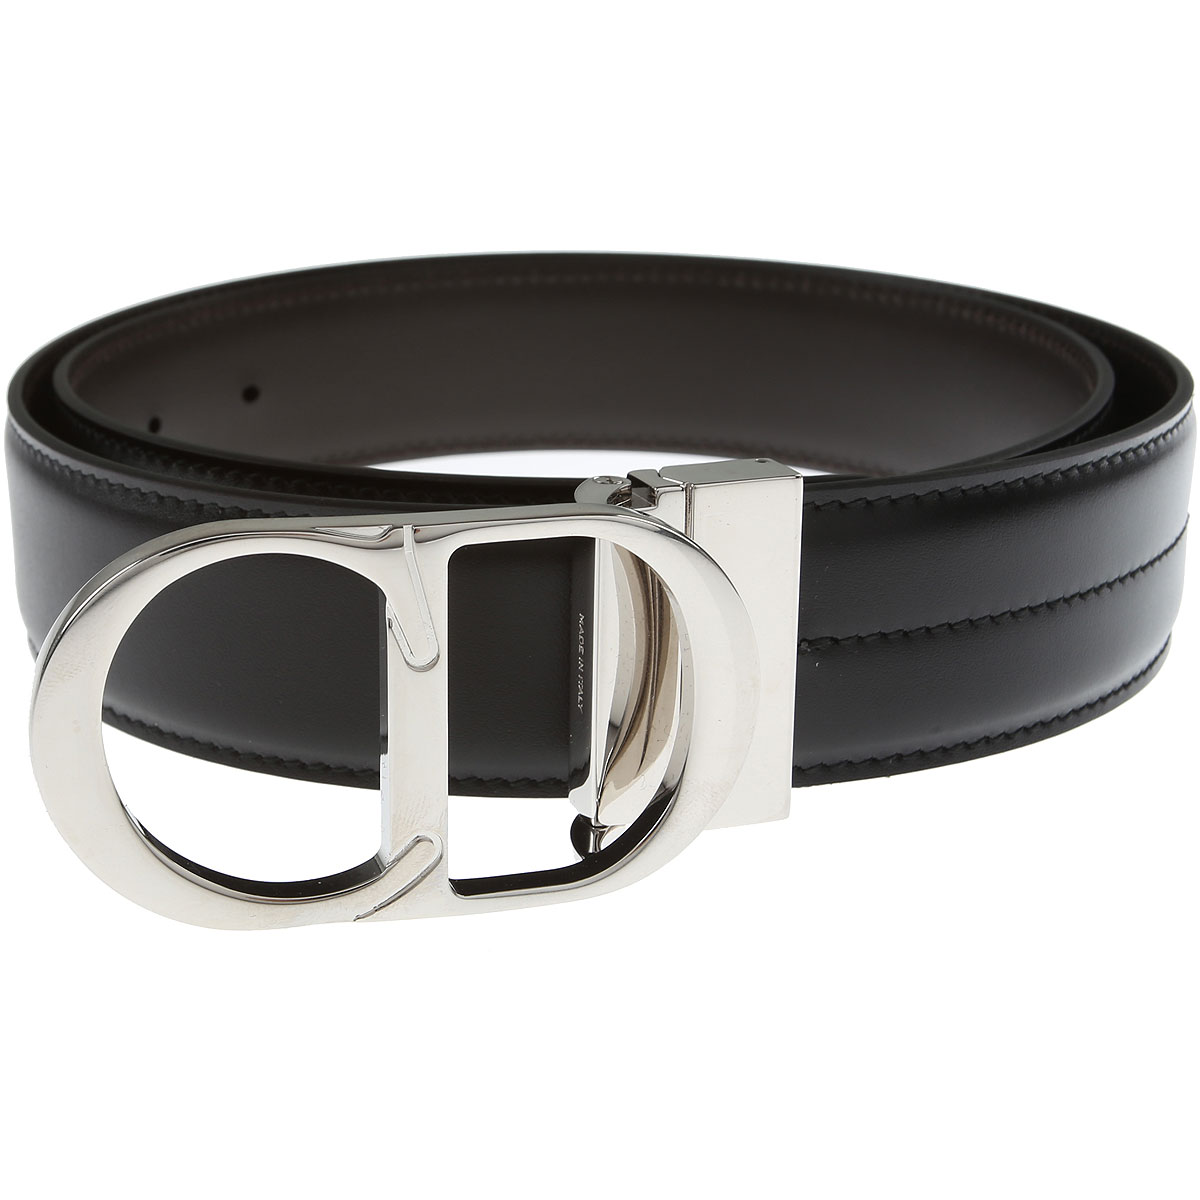 Mens Belts Christian Dior, Style code: 444plve9-54q-